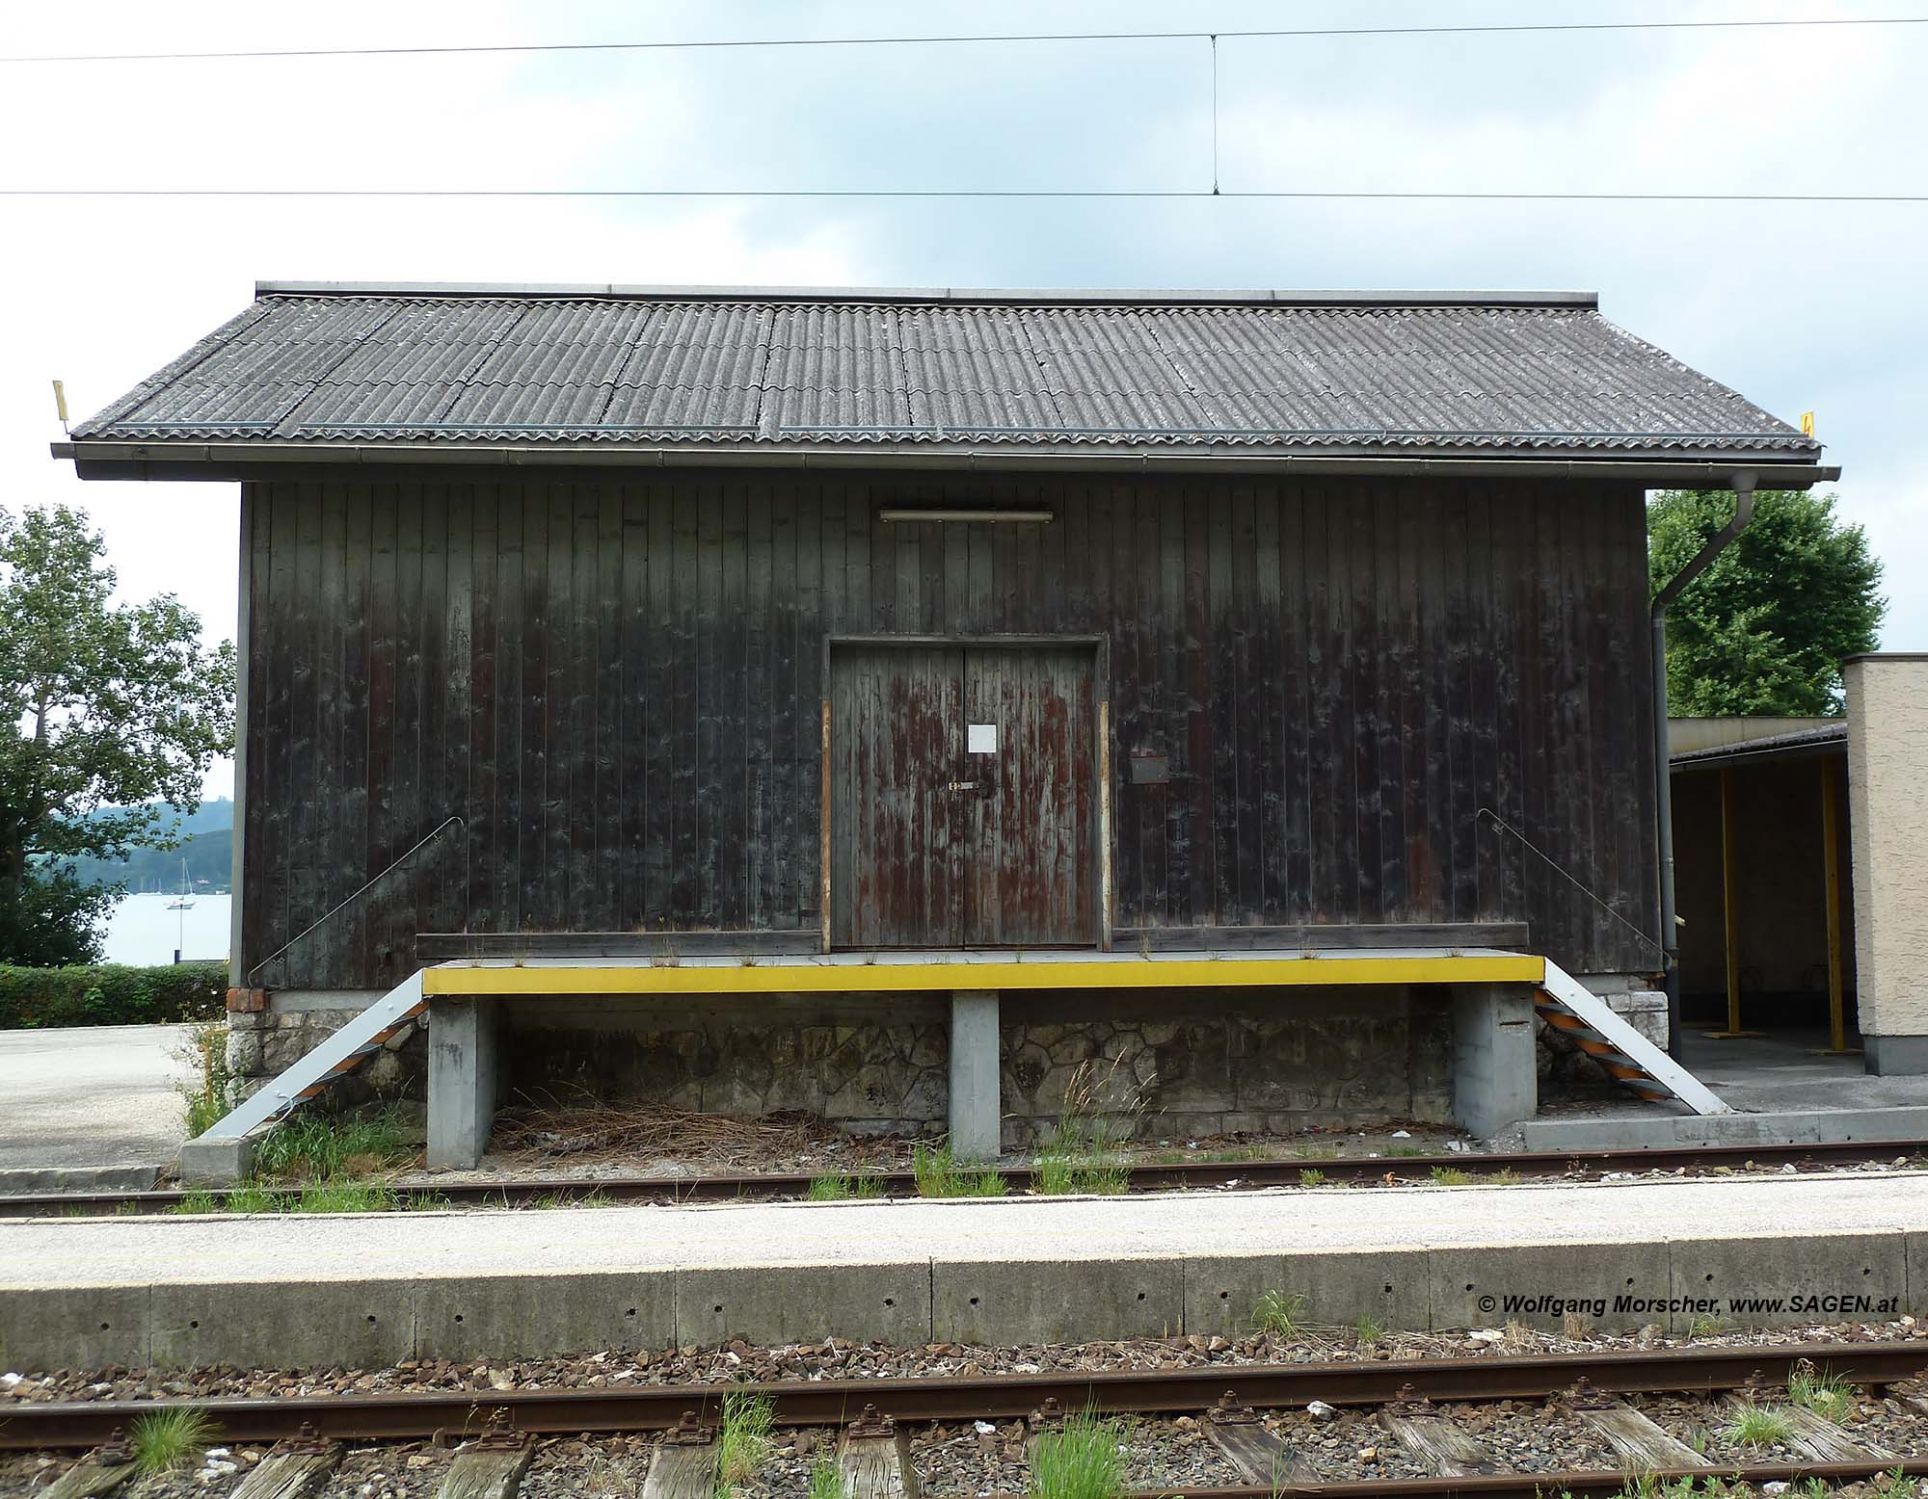 Bahnhof Kammer-Schörfling